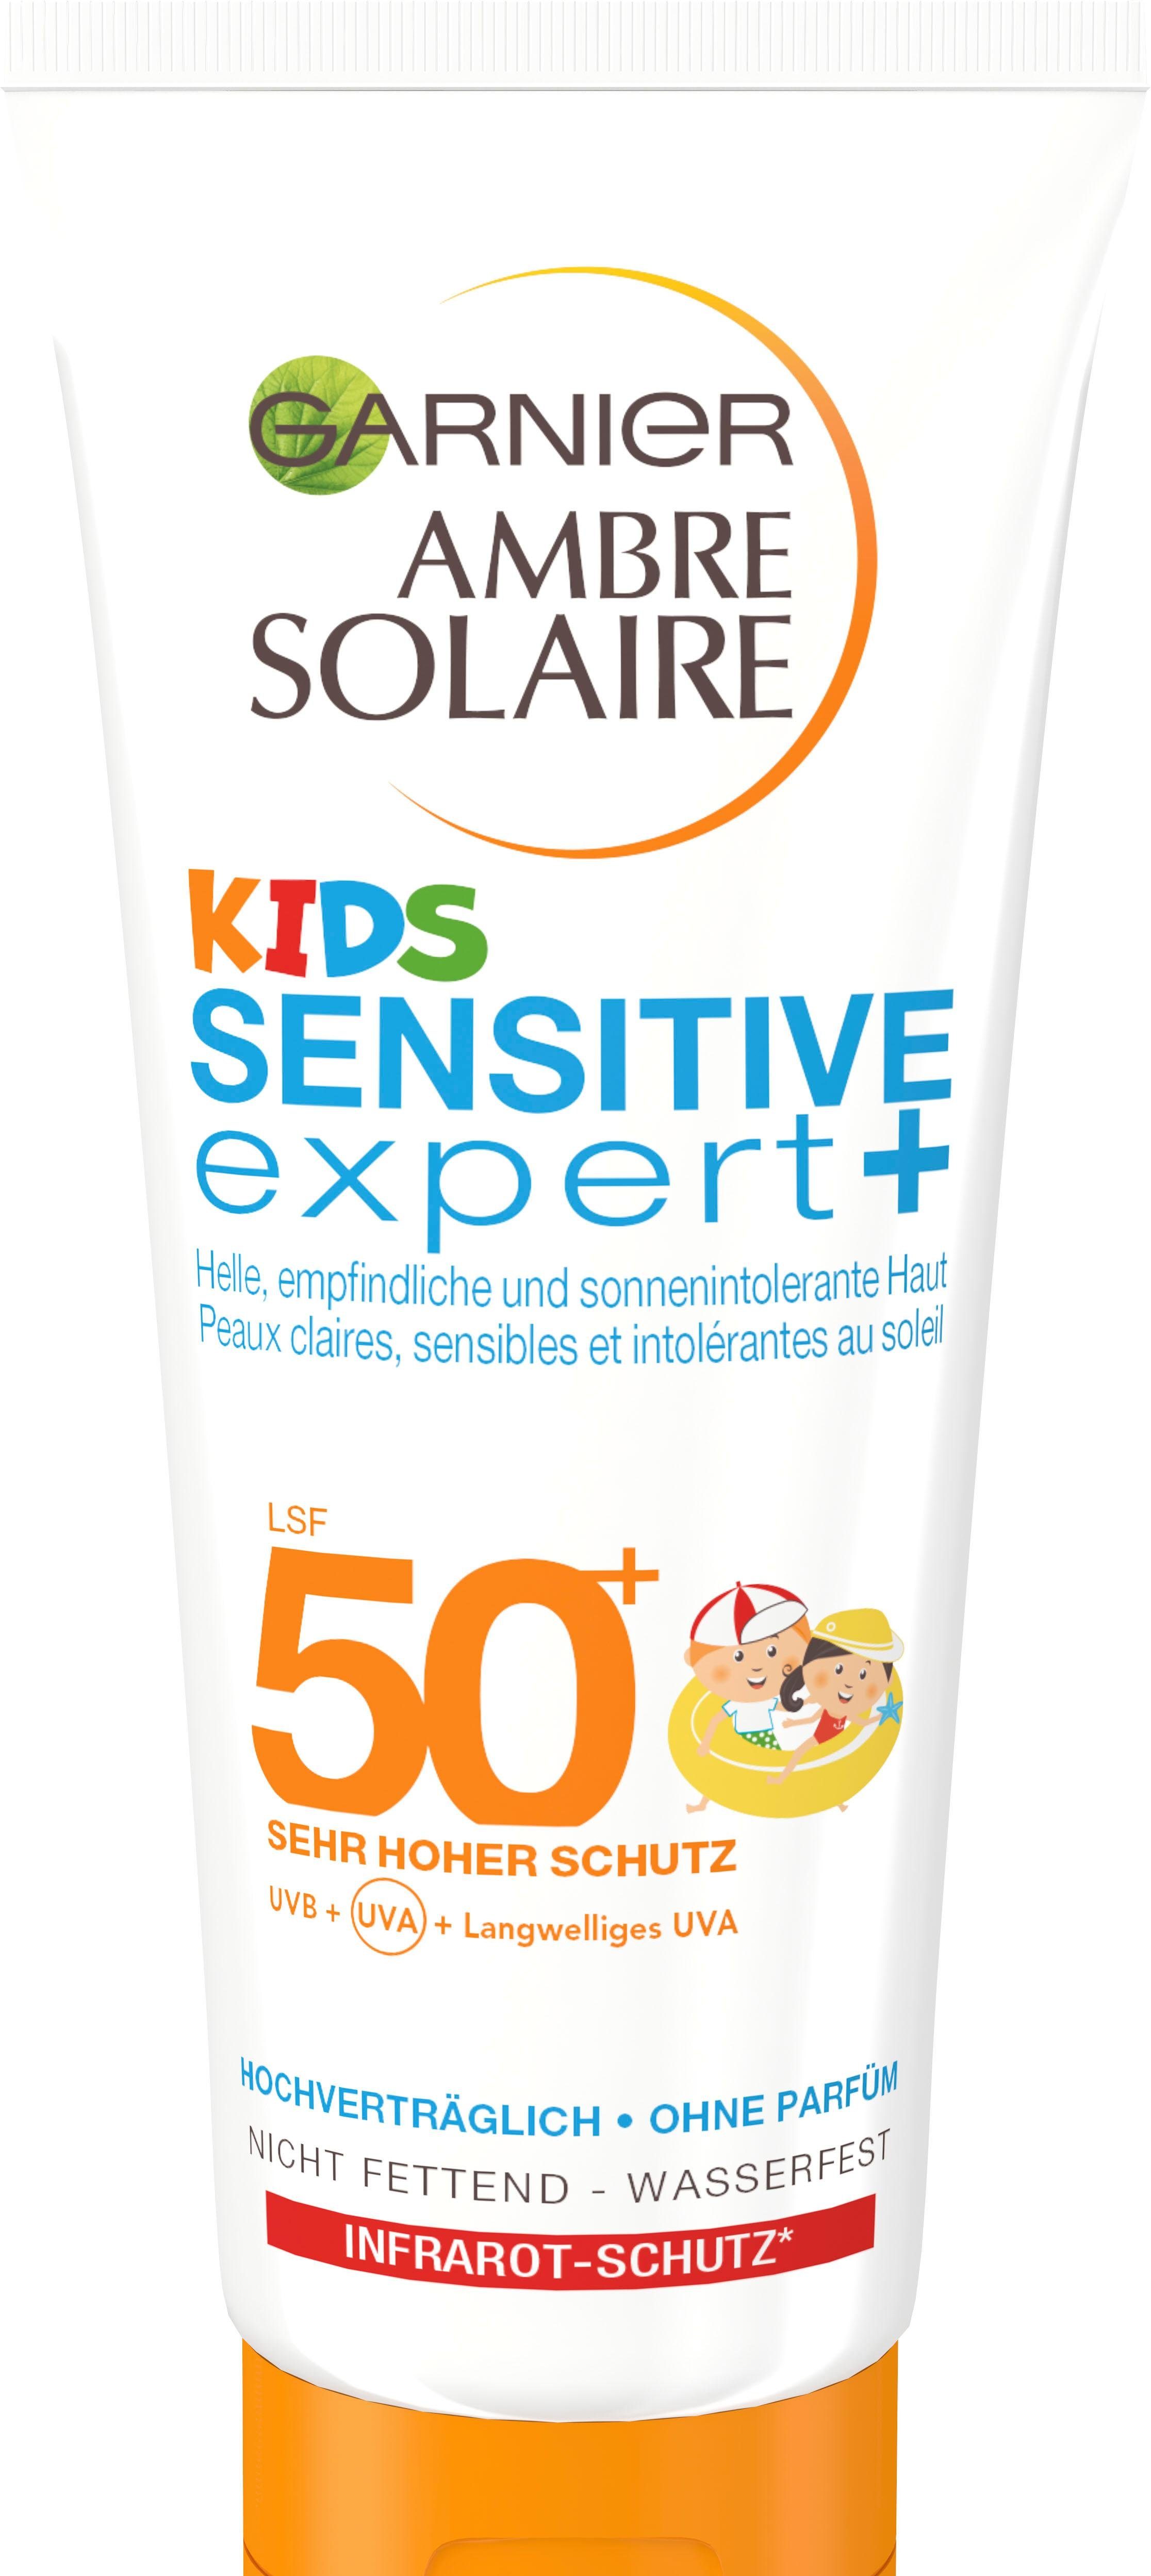 Solaire Ambre 50+ Sonnenschutzcreme Sensitive GARNIER Kids Expert LSF